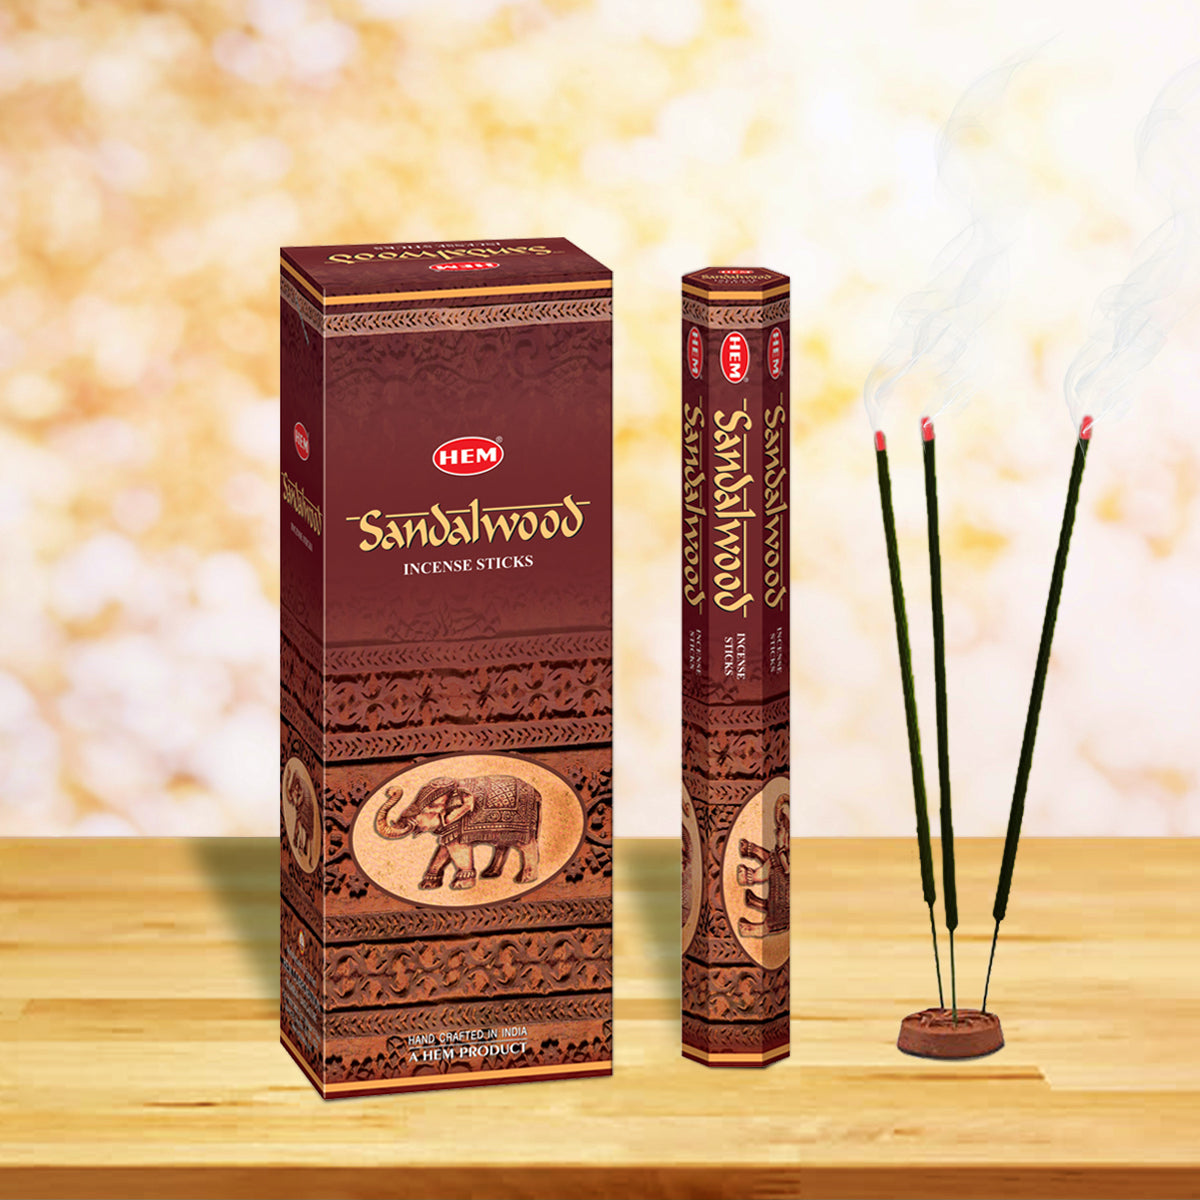 sandalwood incense